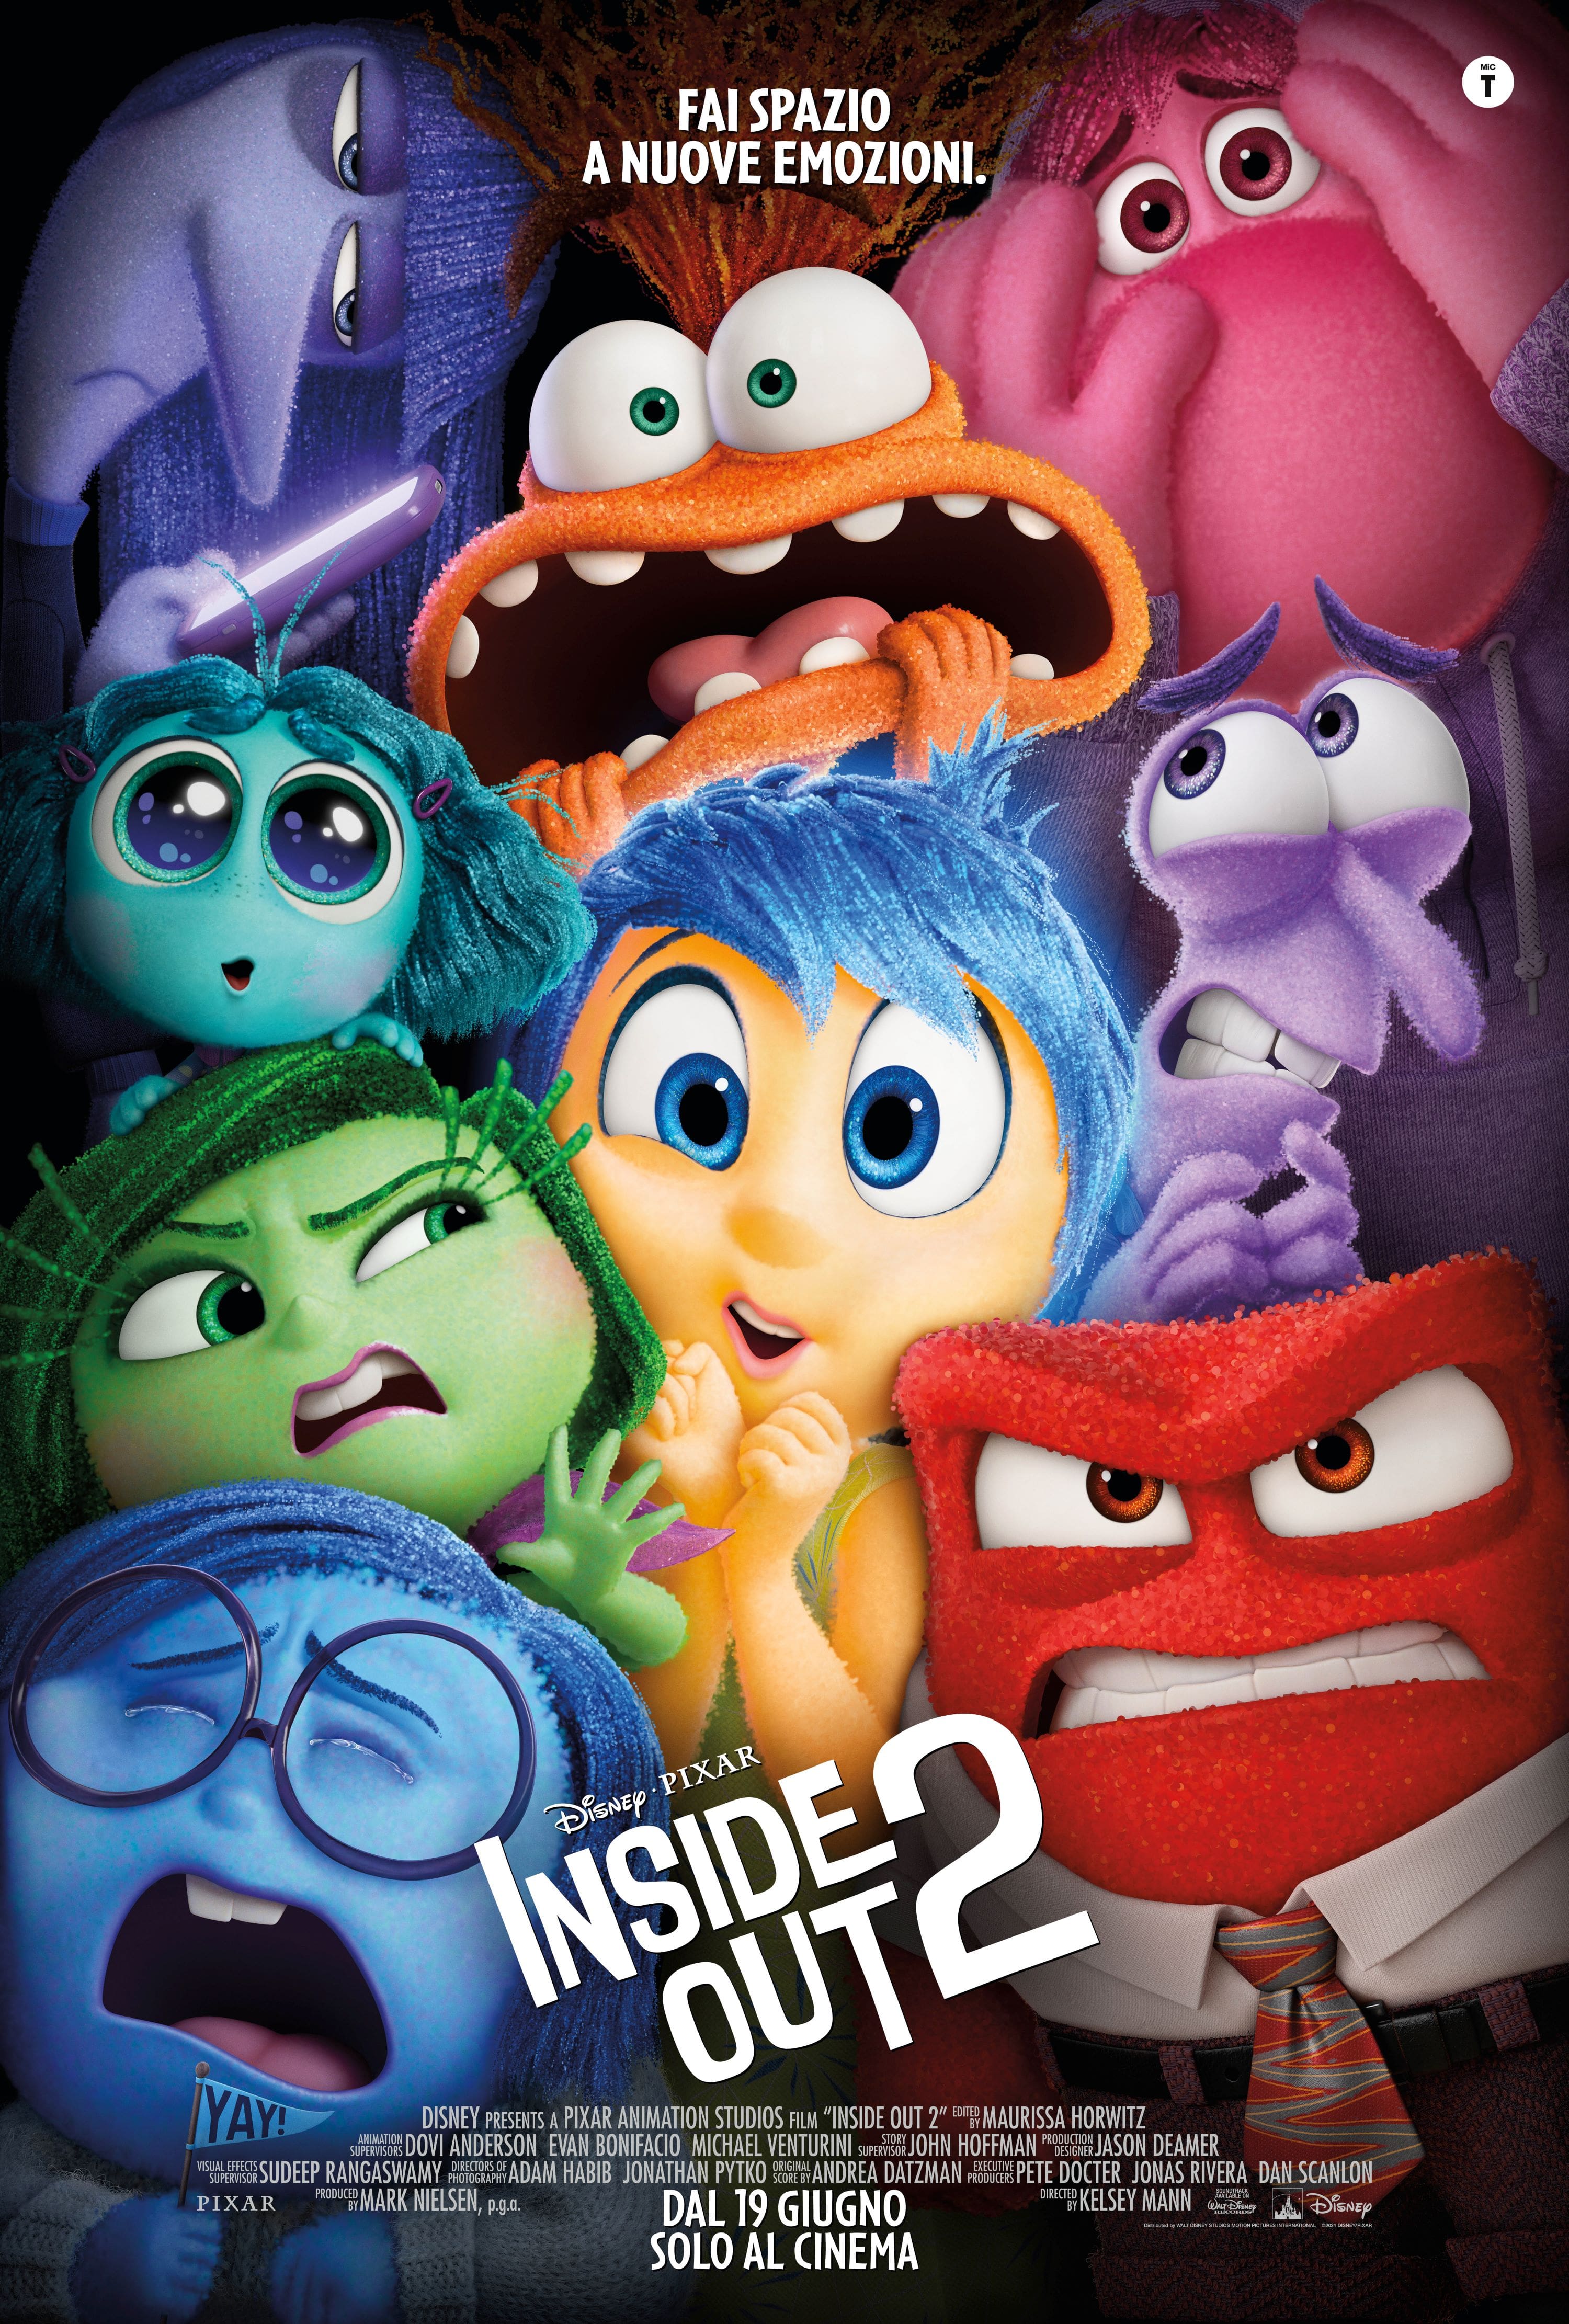 Il poster di Inside Out 2